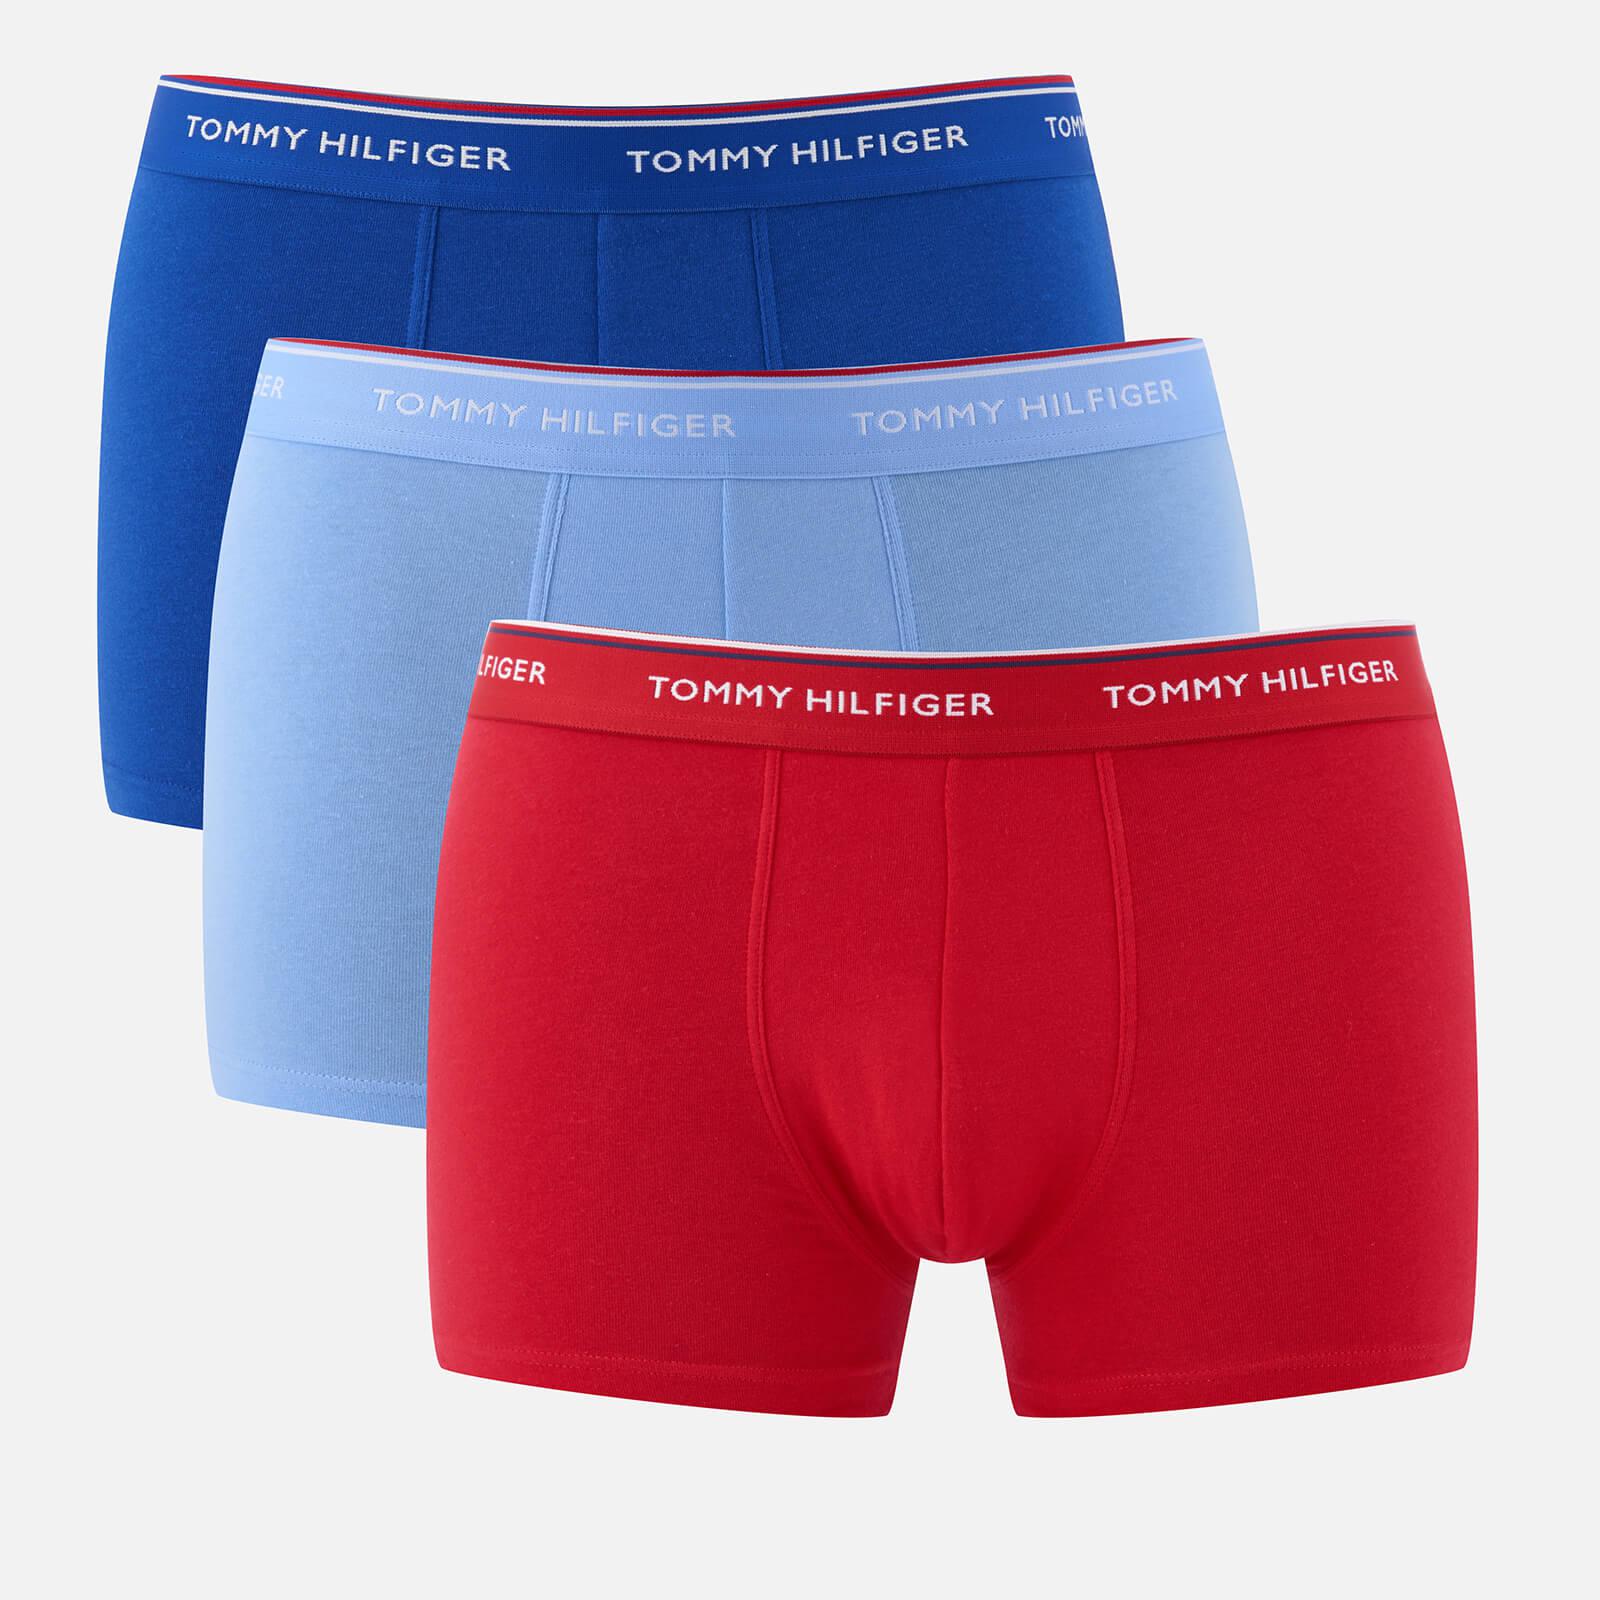 Lyst - Tommy Hilfiger 3 Pack Trunk Boxer Shorts for Men